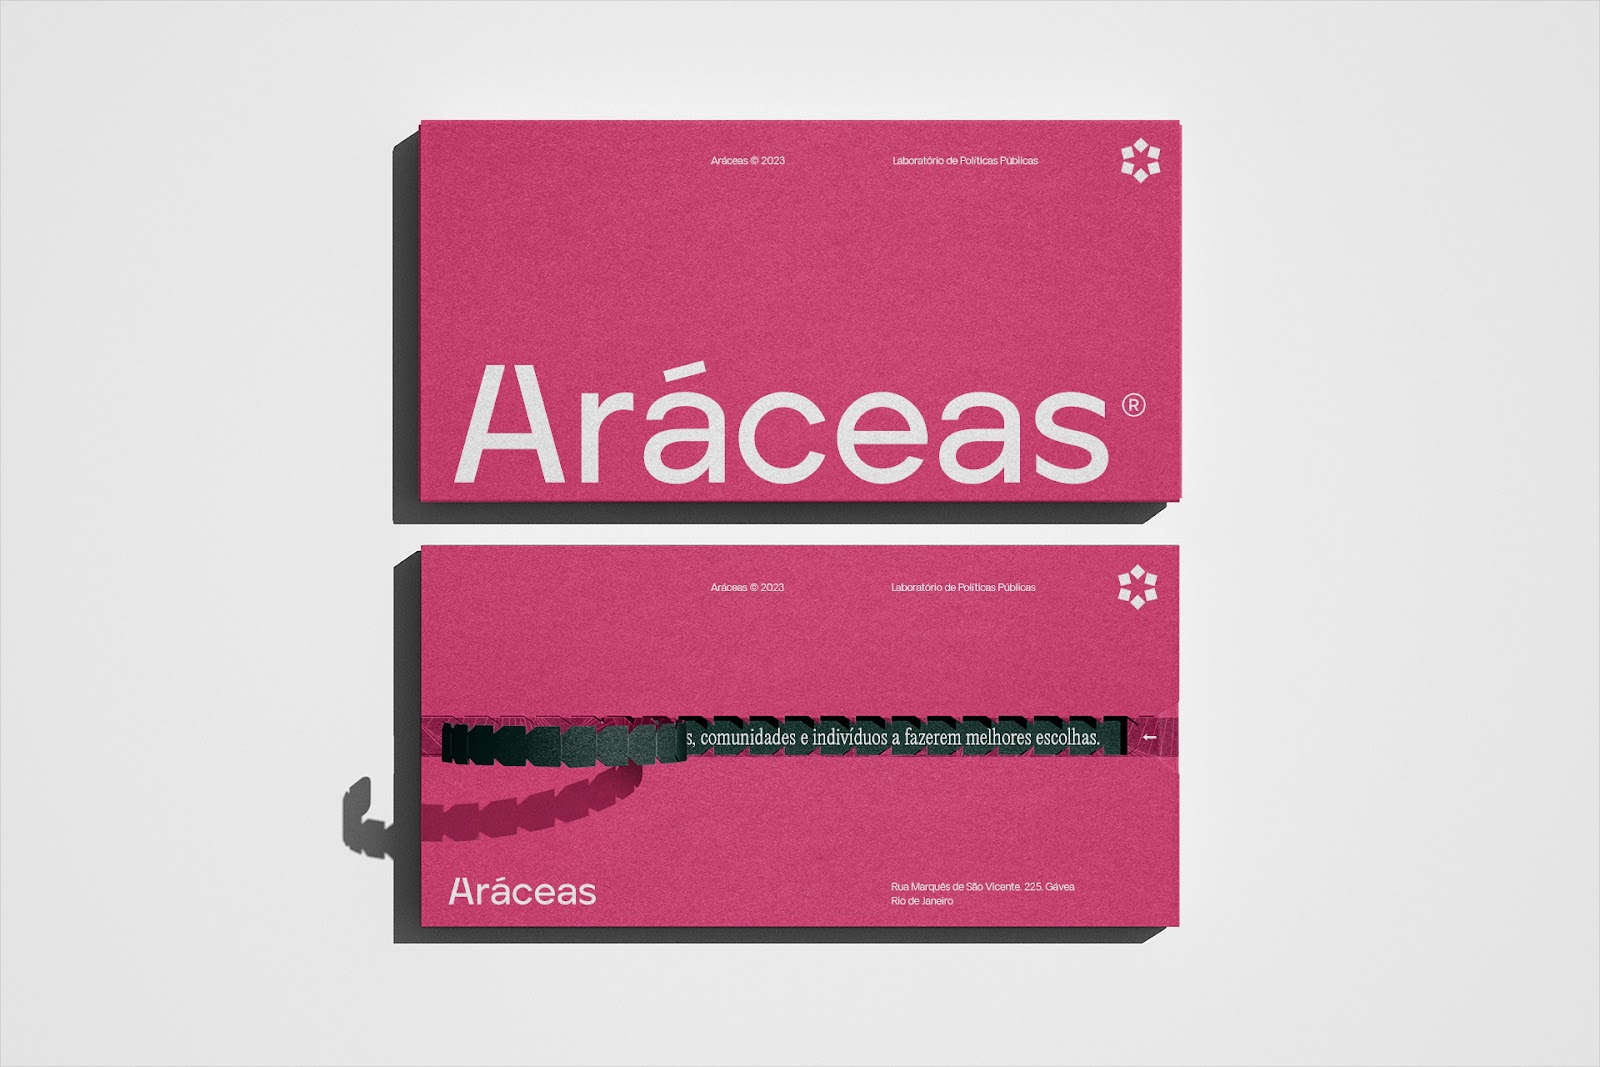 Artifact from the Aráceas Branding & Visual Identity in Academia article on Abduzeedo